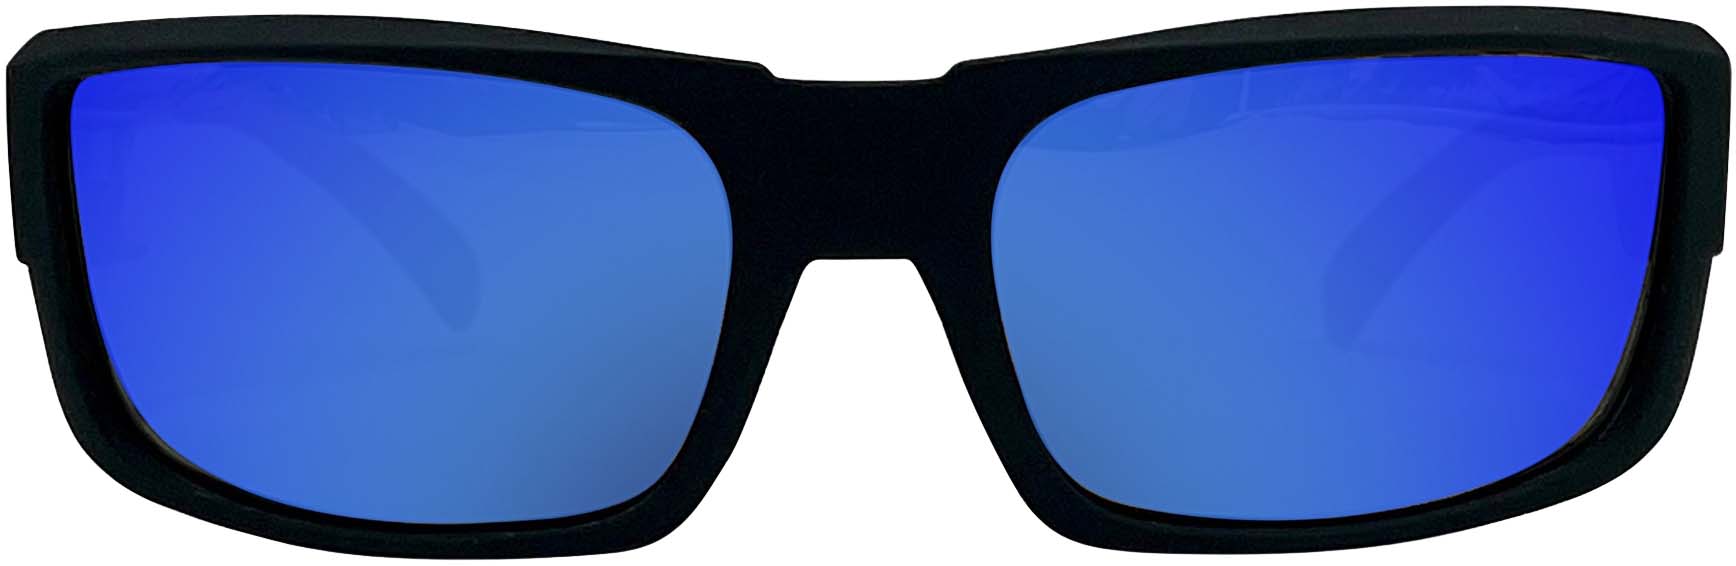 RLVNT Renegade Series Sunglasses